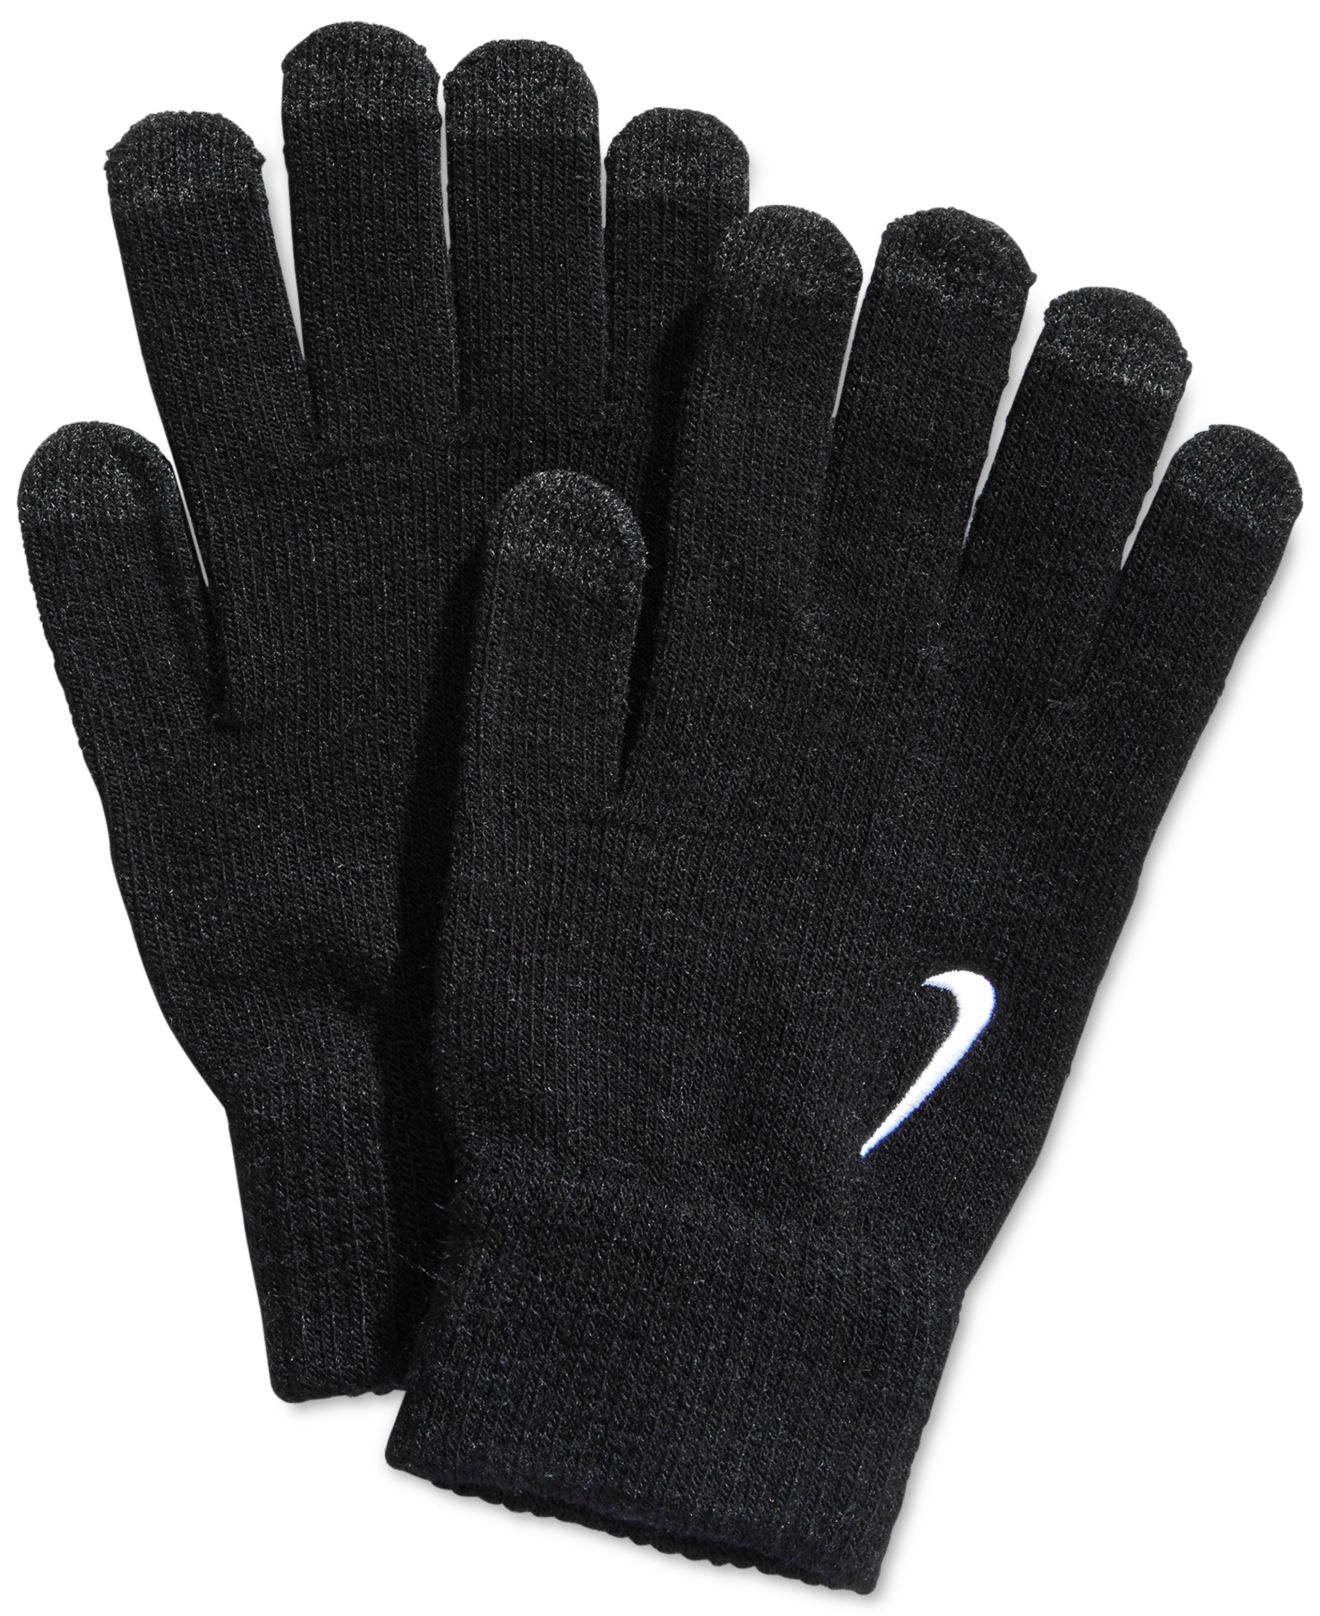 Lyst Nike Knit Tech Gloves in Black for Men